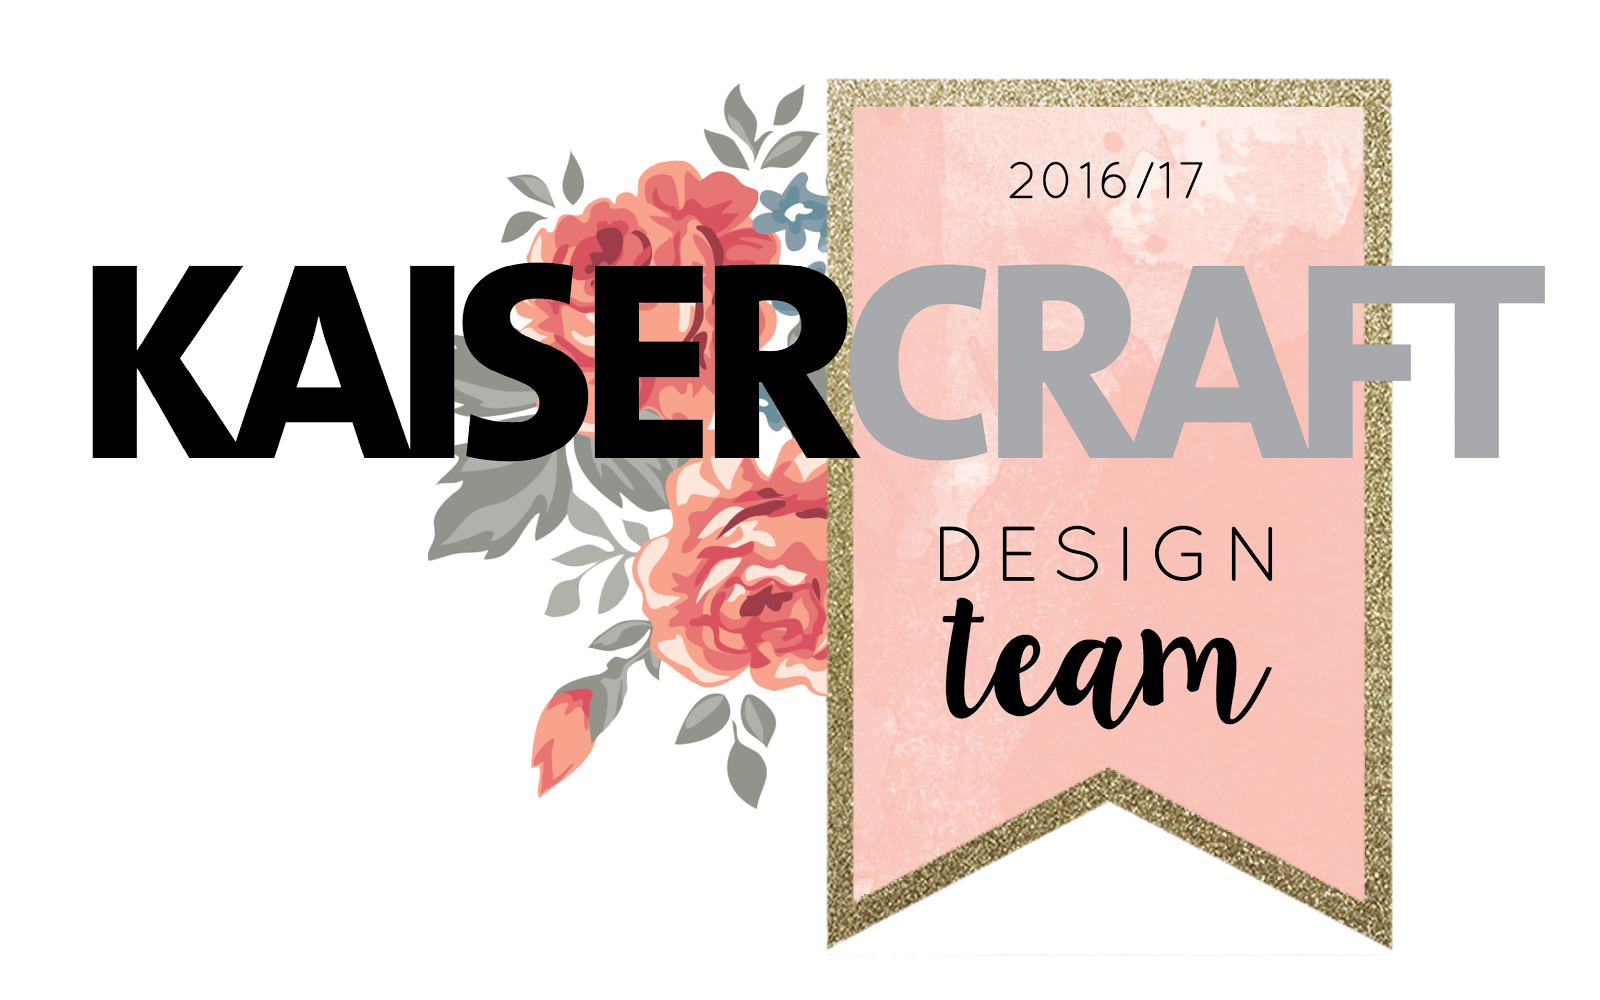 Kaisercraft design team 2016-17